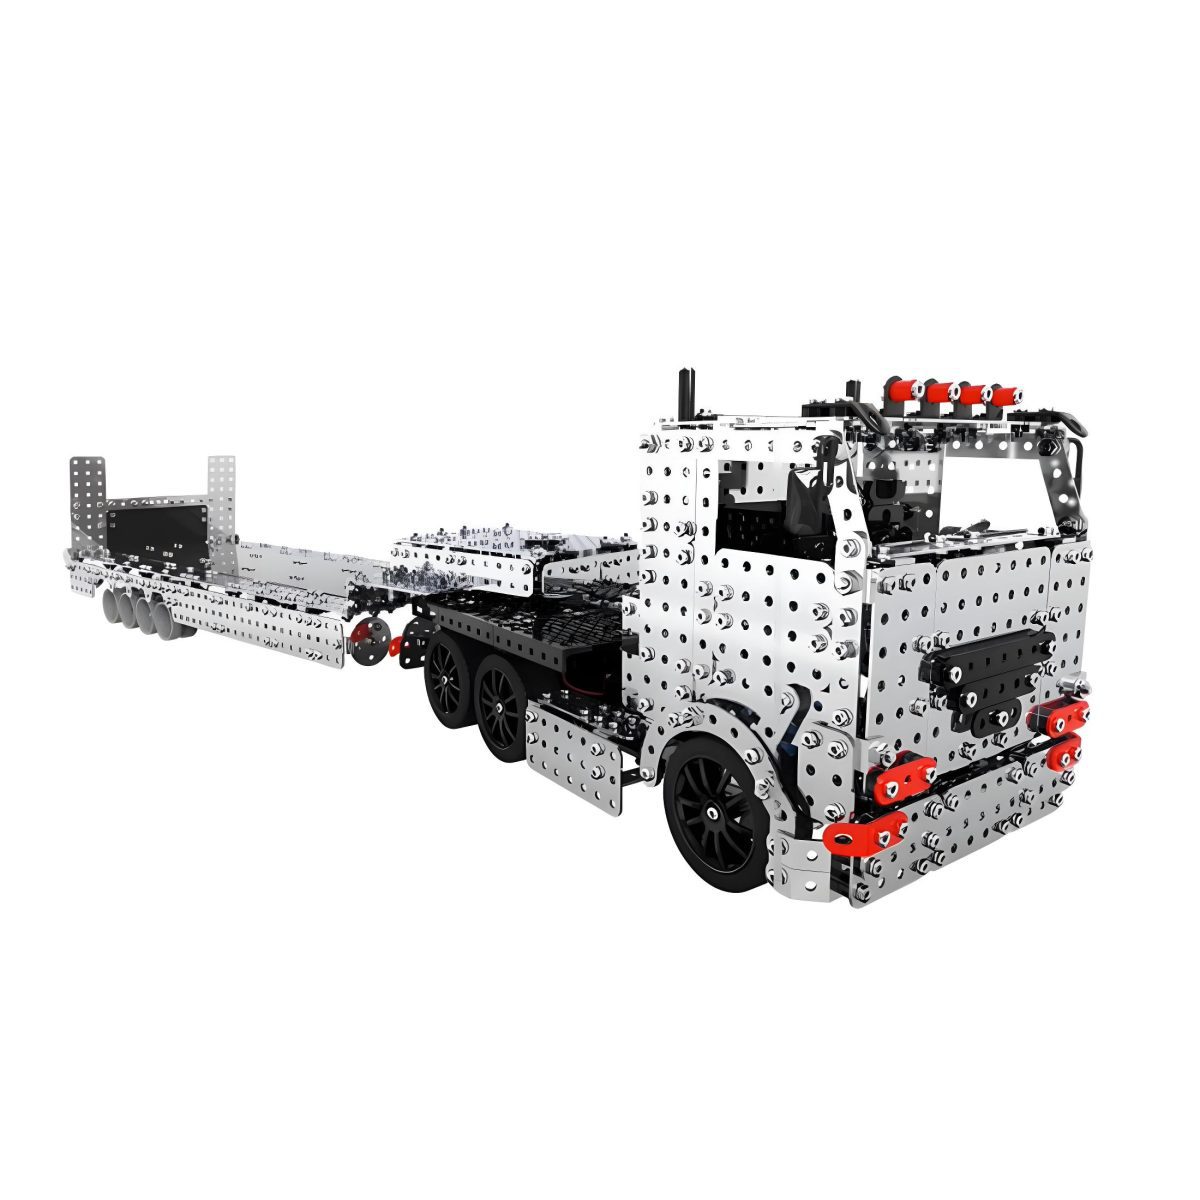 3D Metal Puzzle Electric Trailer Tractor - DIY RC Metal Vehicle Model - 2100 Pieces